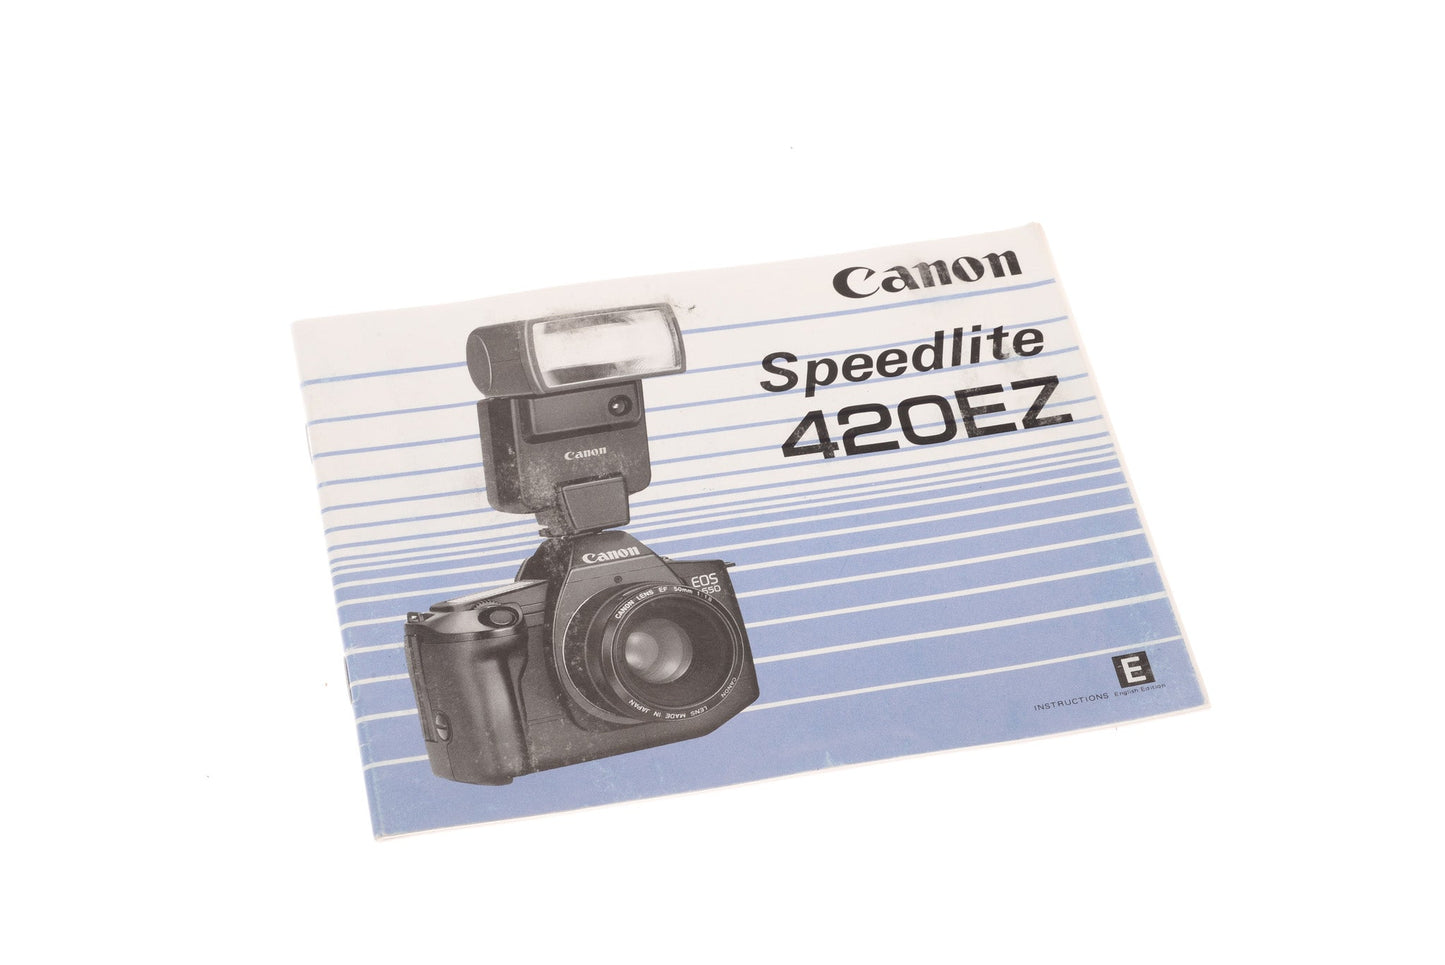 Canon 420EZ Speedlite Instruction Manual - Accessory